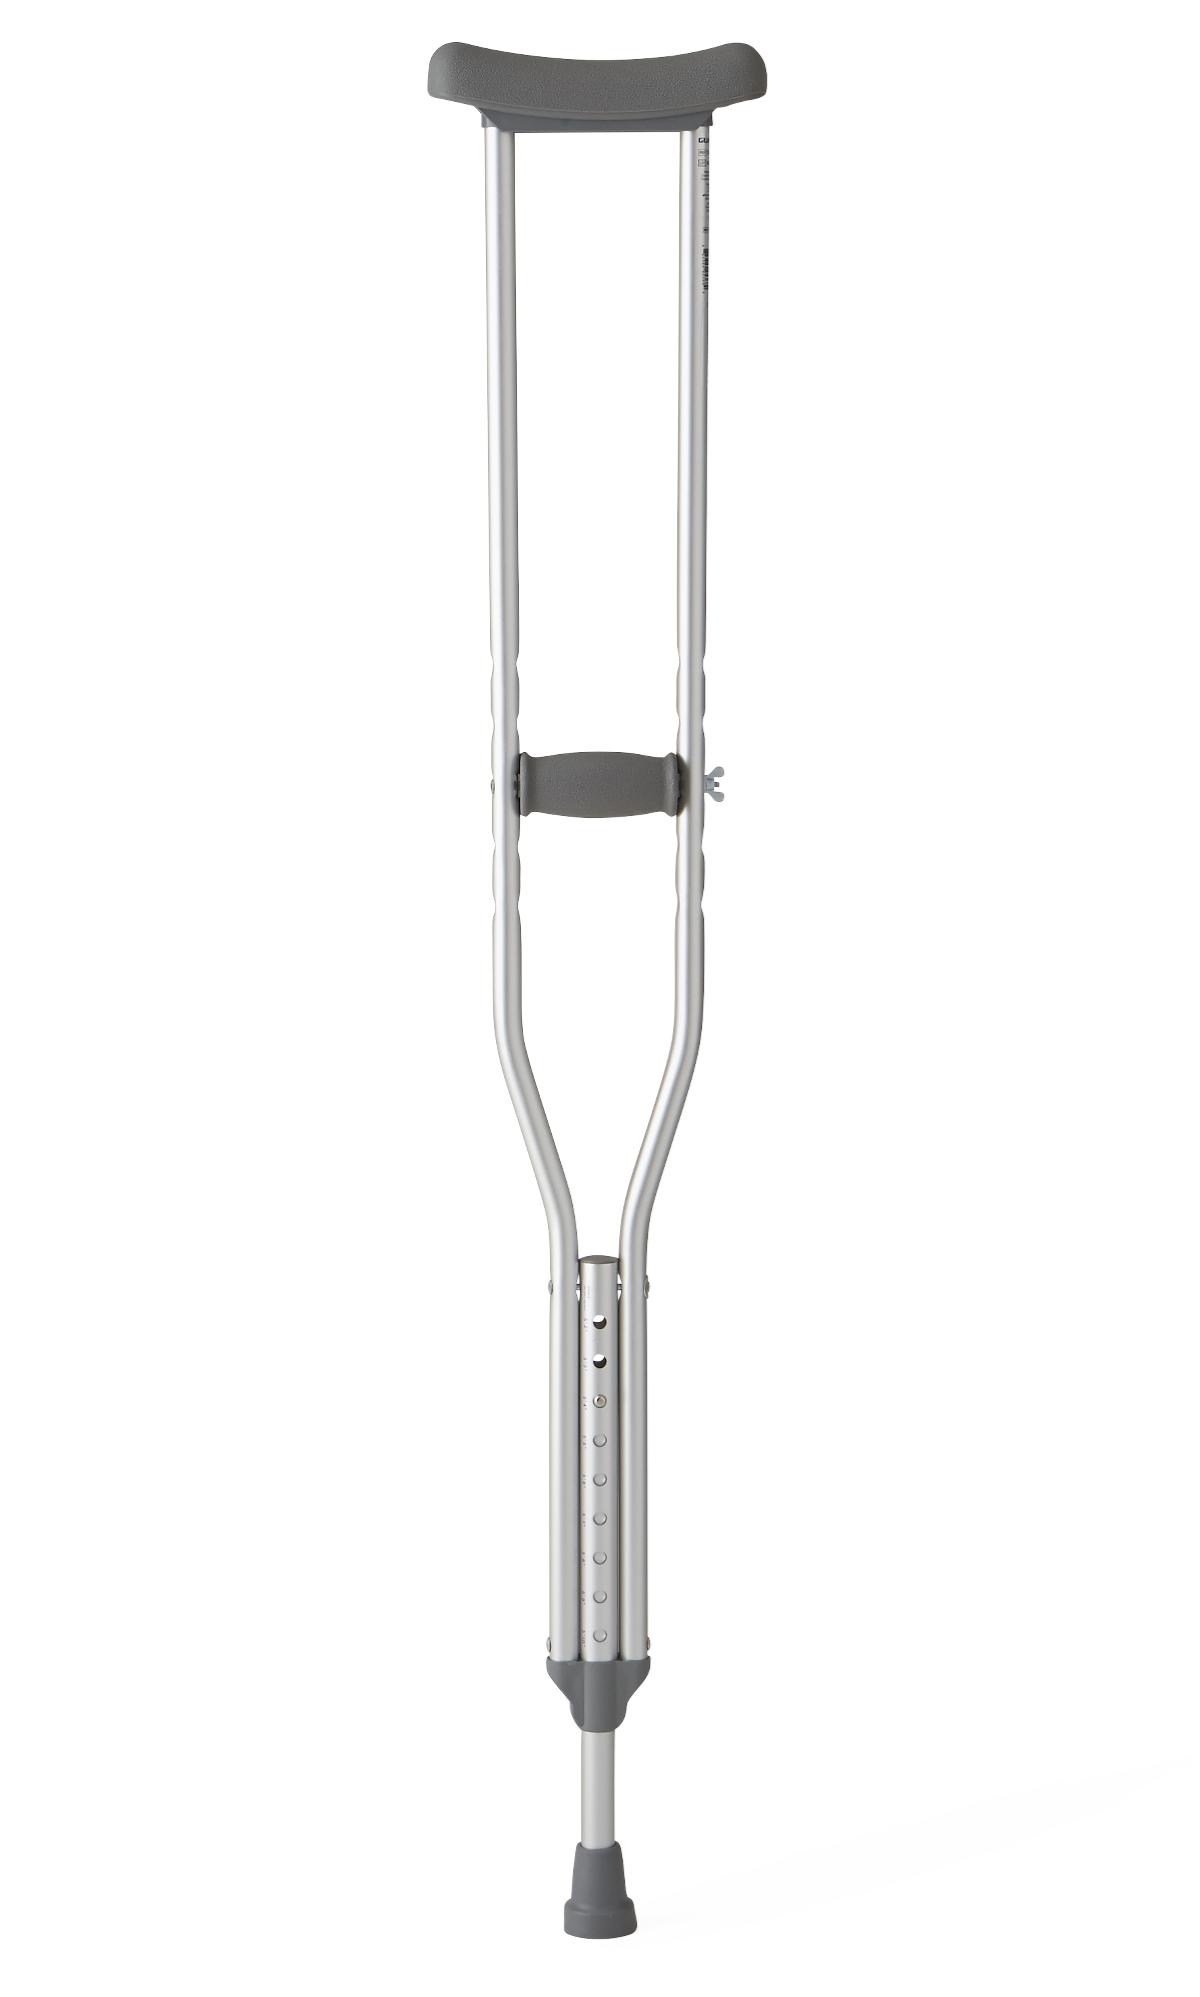 Crutches Adult Tall MDSV80534